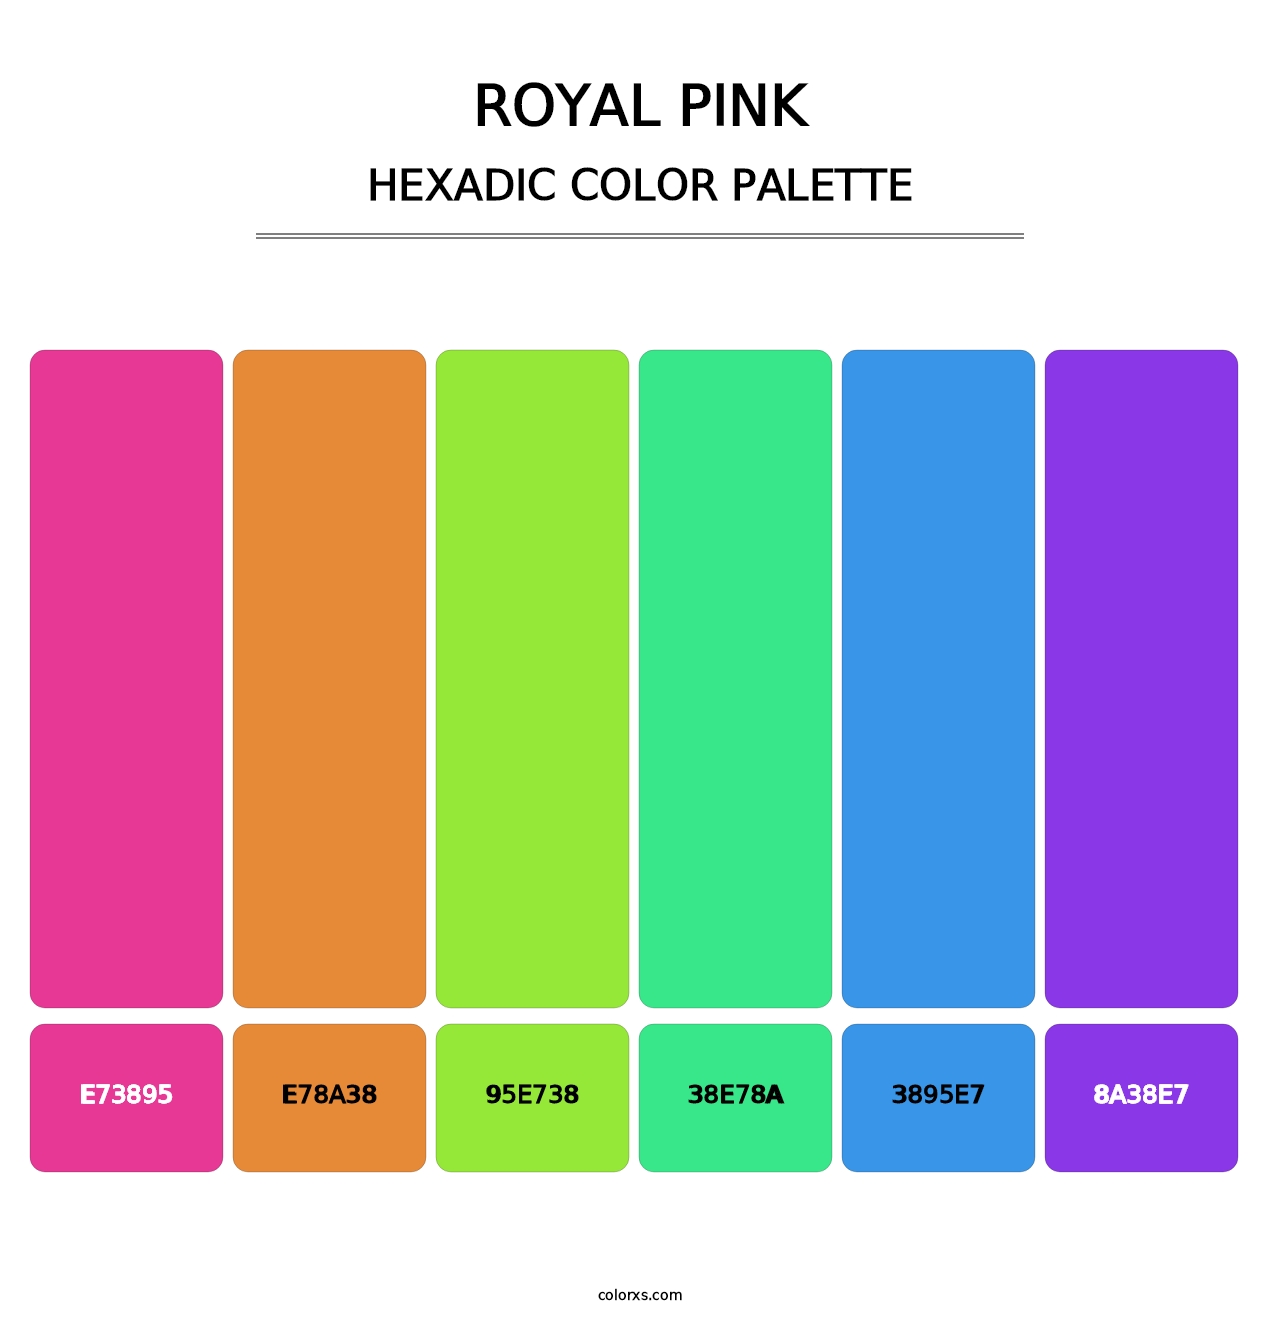 Royal Pink - Hexadic Color Palette